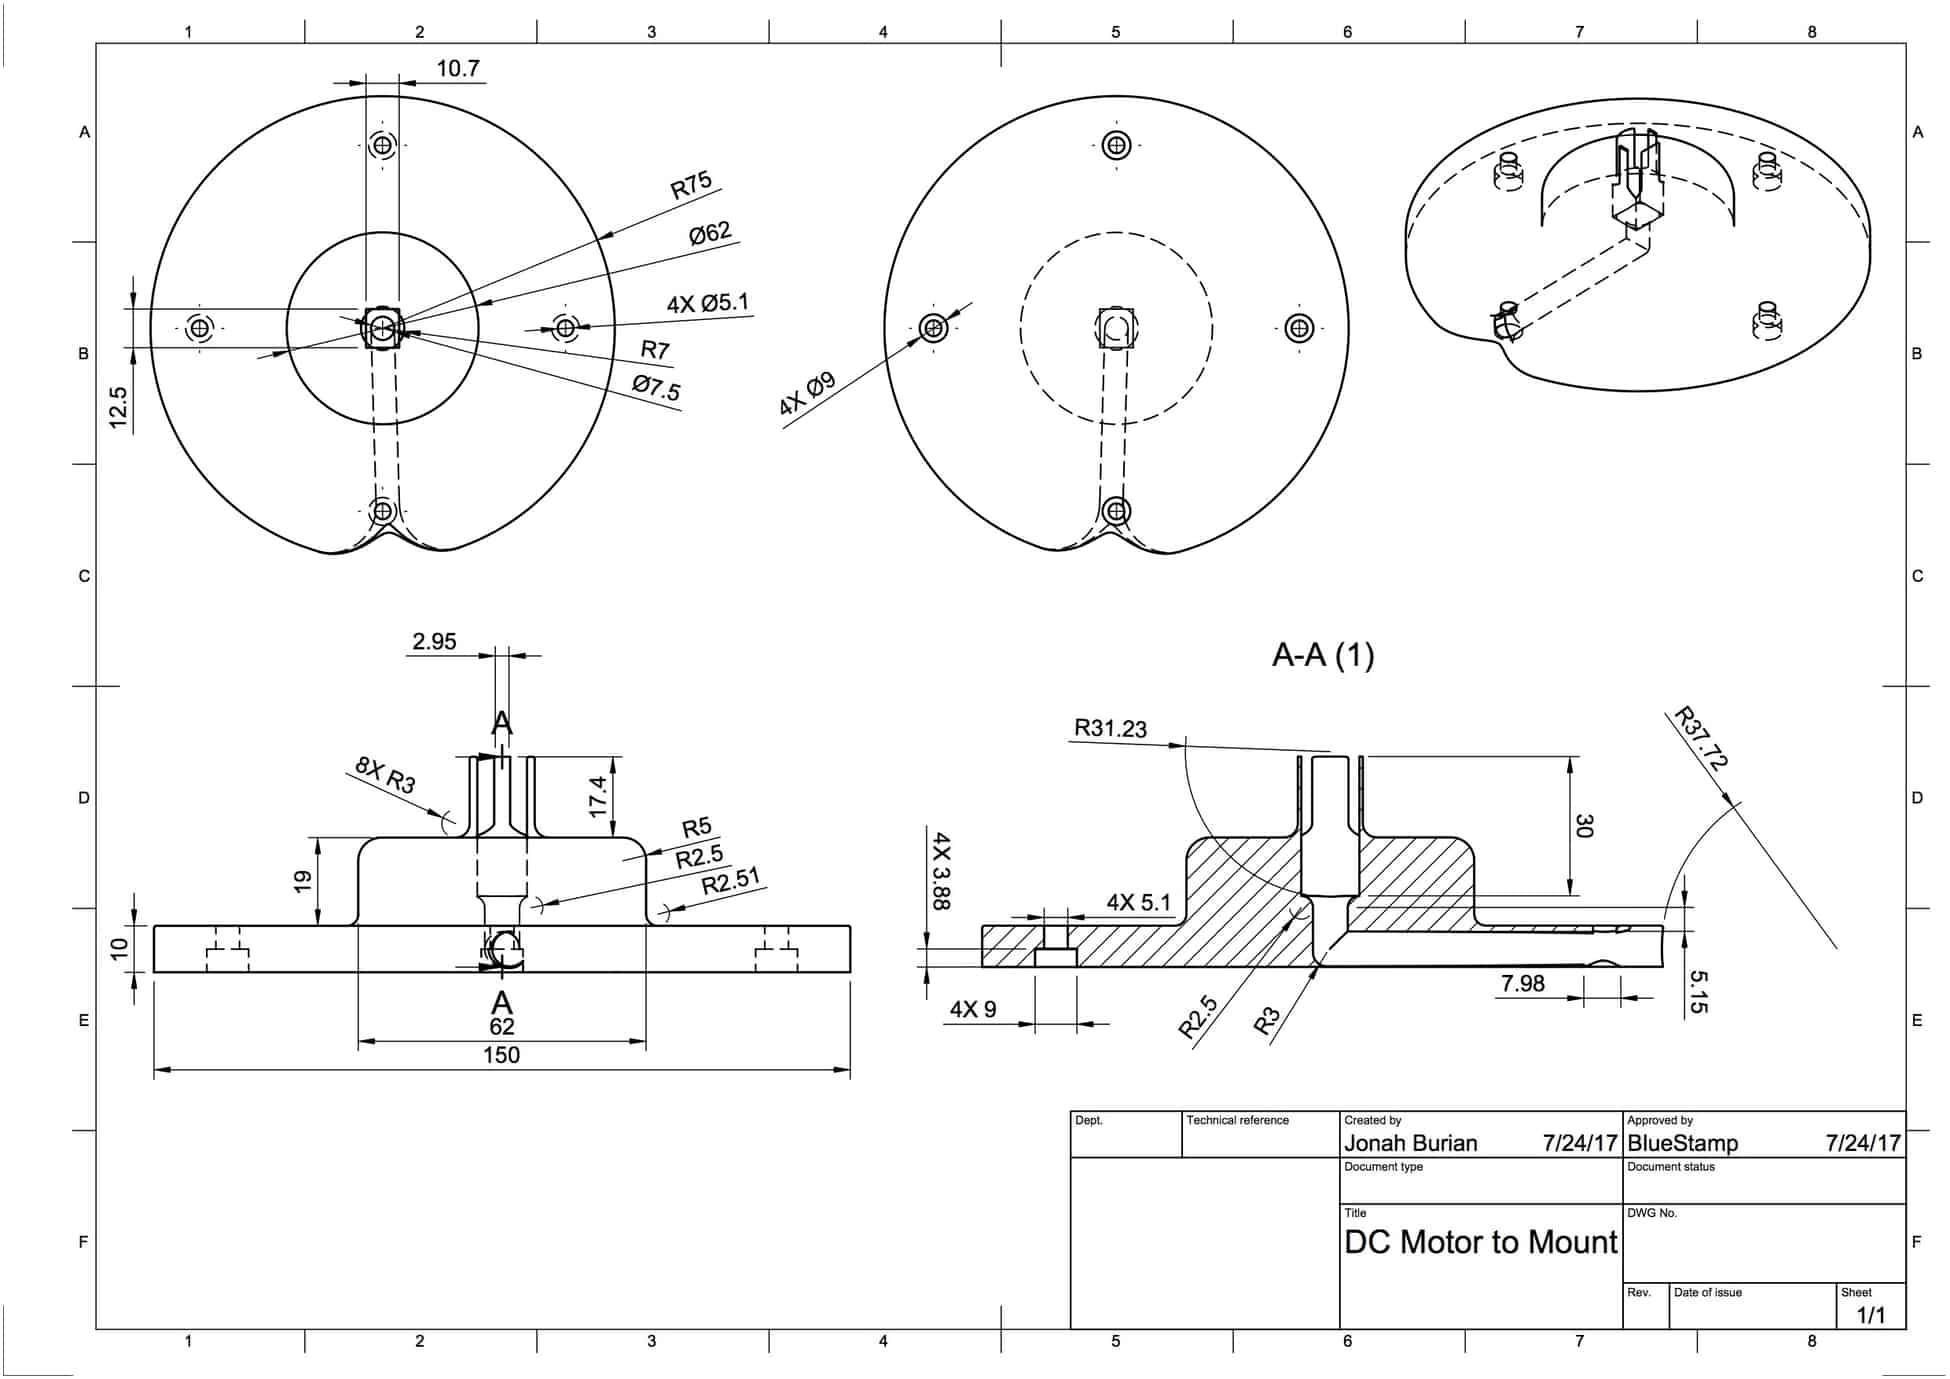 dc-motor-to-mount-drawing-v3